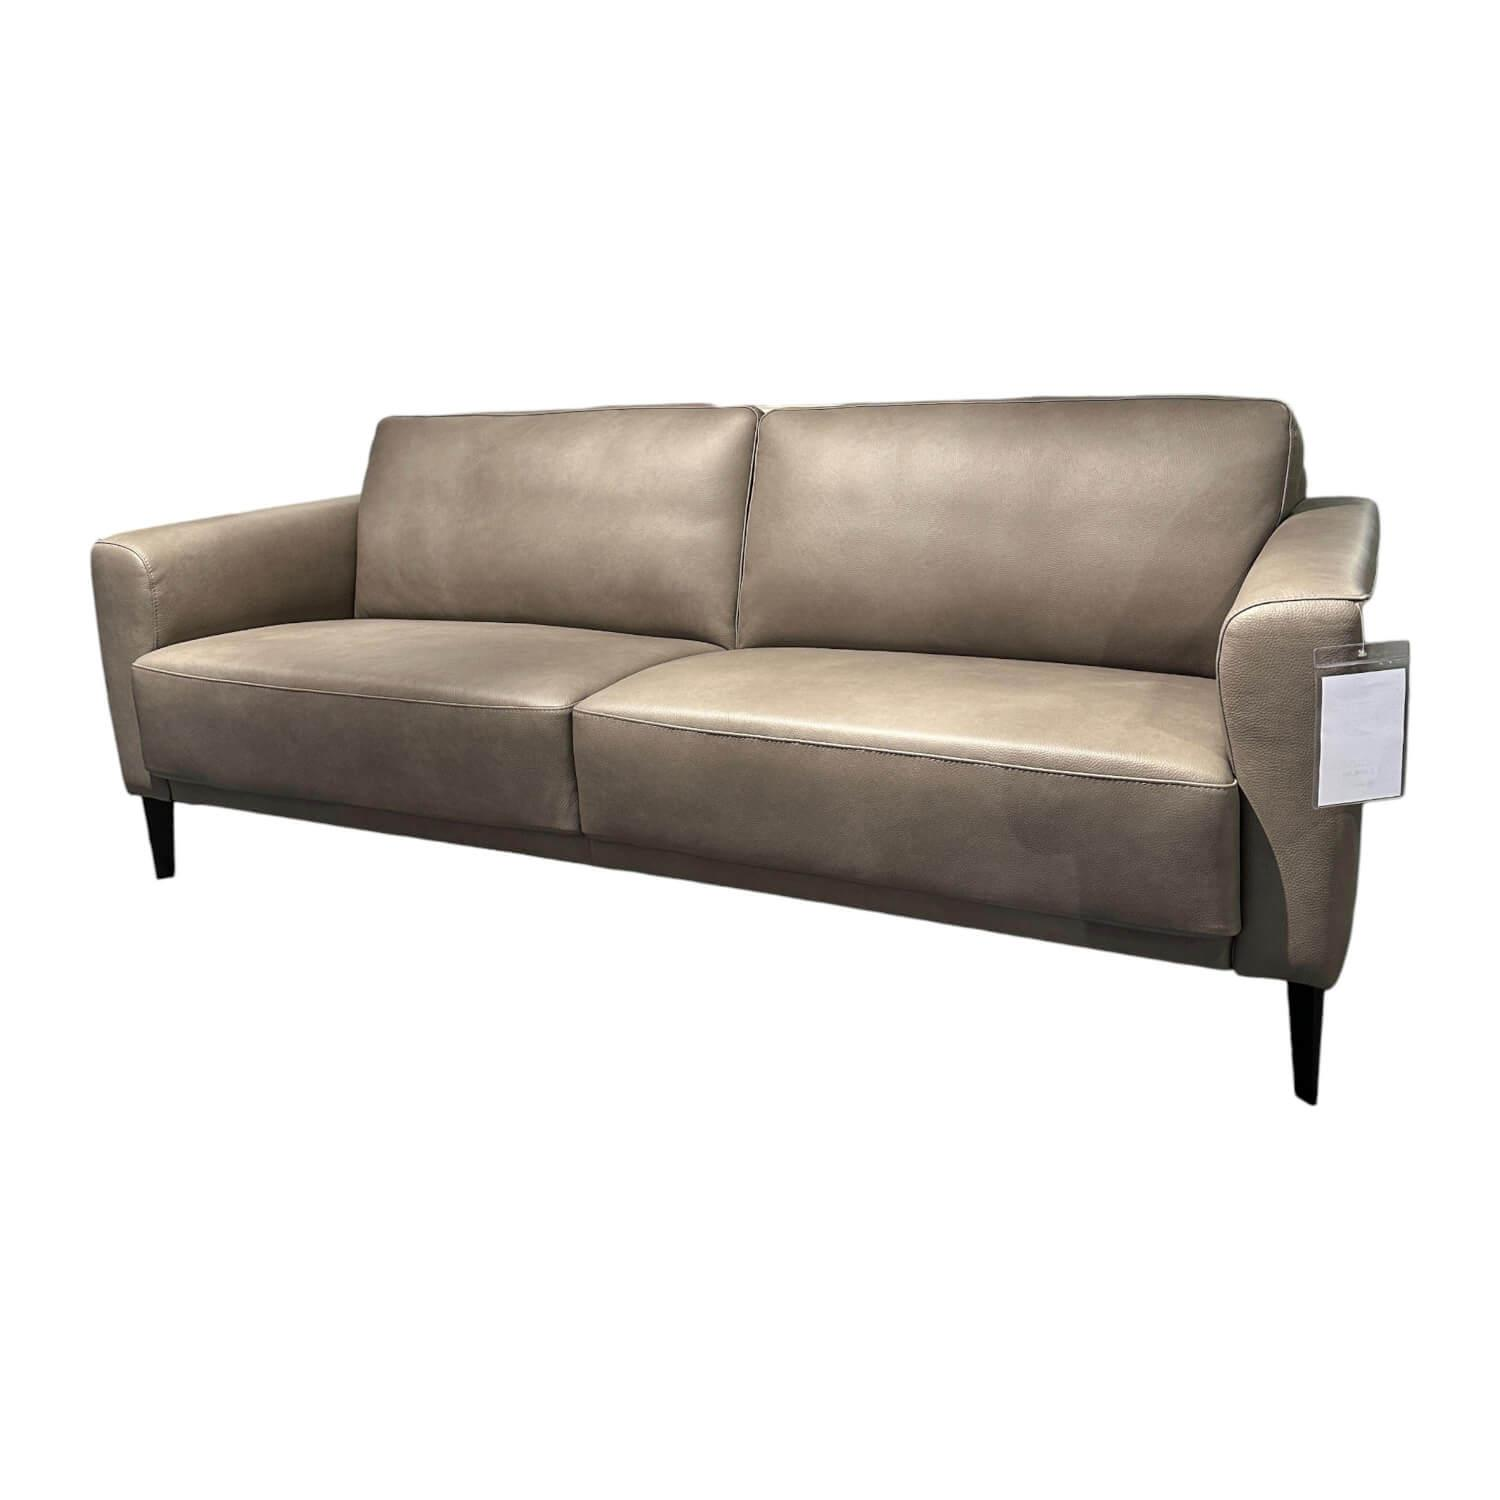 Sofa Mr 6500 Bezug Nappaleder Solid Elefant Grau Füße Aluminium Schwarz Matt